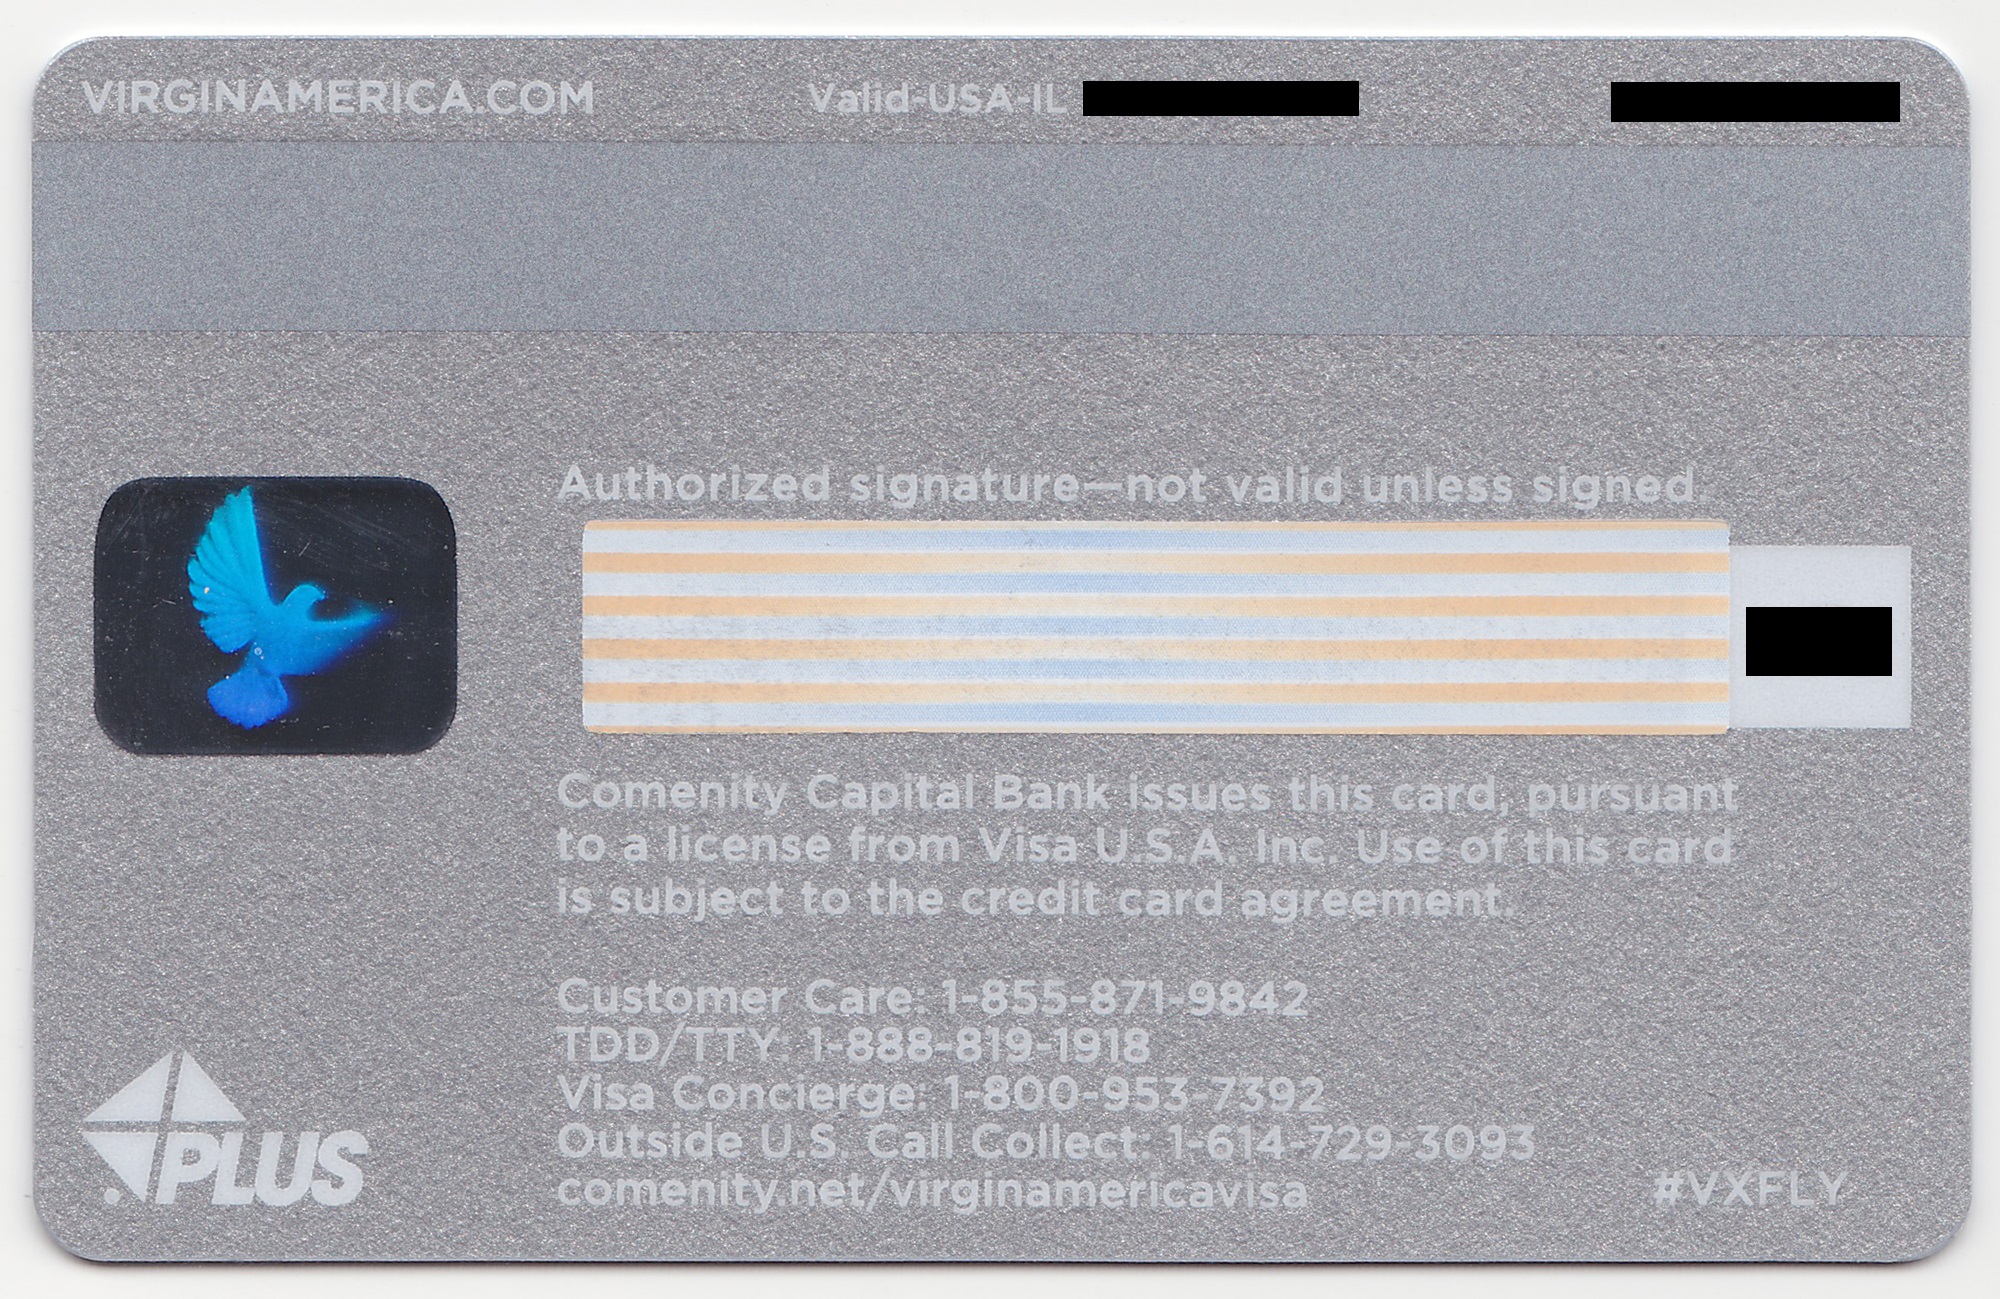 Citi AT&T Access More, US Bank Korean Air & Comenity Virgin America Credit Card Art and Info